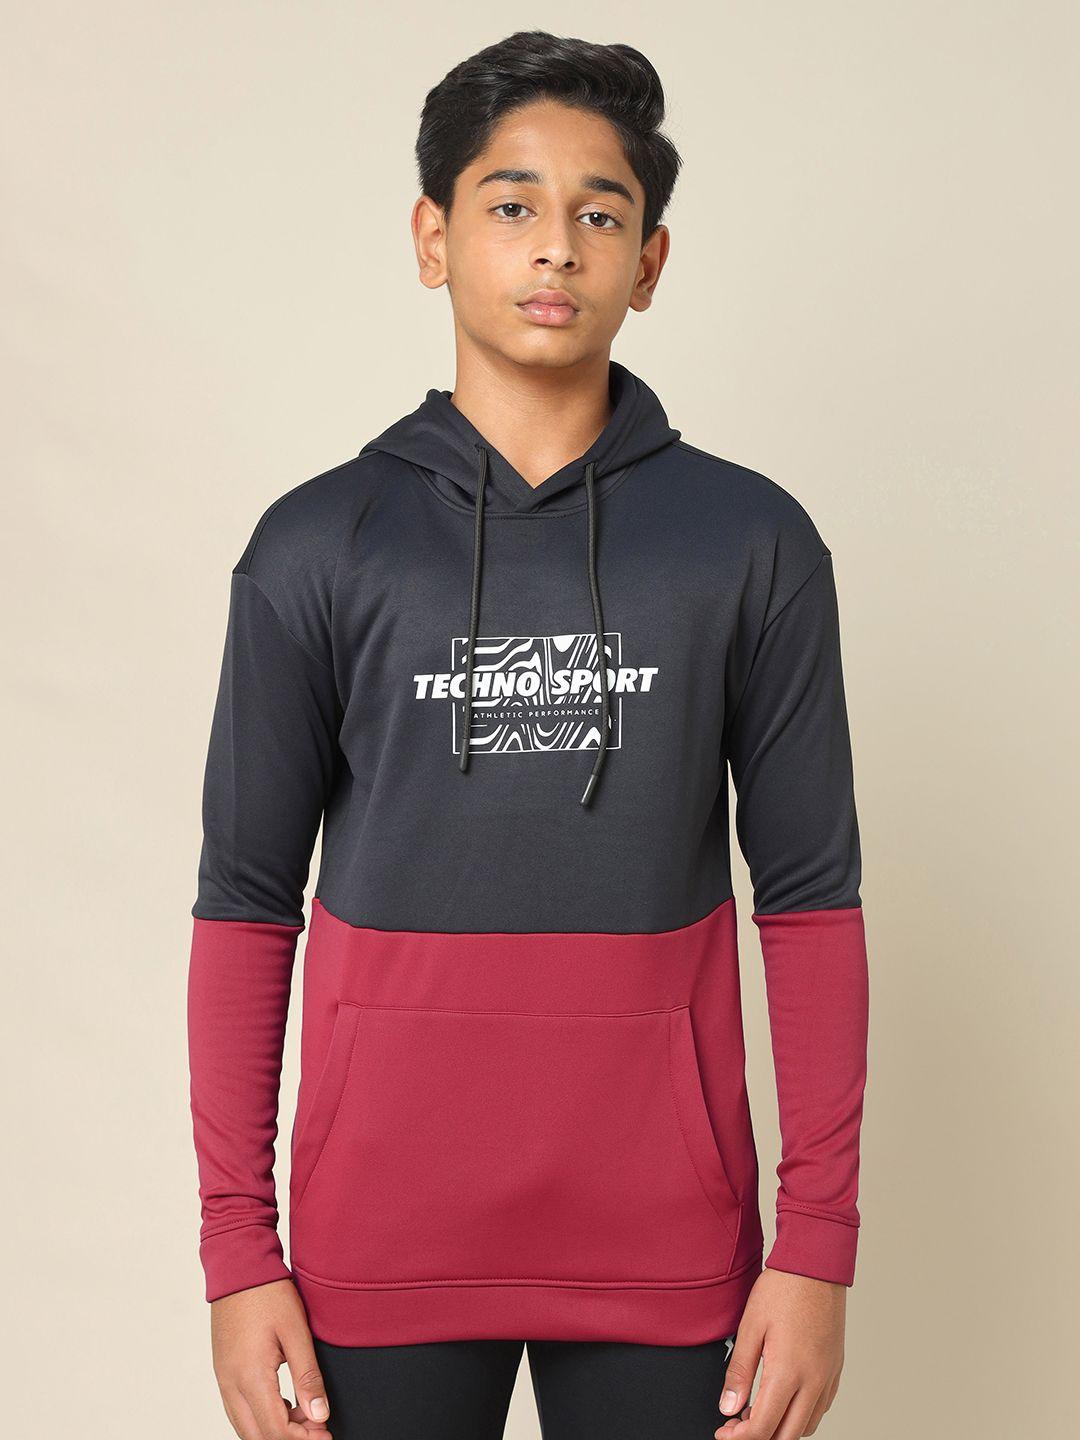 technosport-boys-graphic-printed-hooded-pullover-sweatshirt